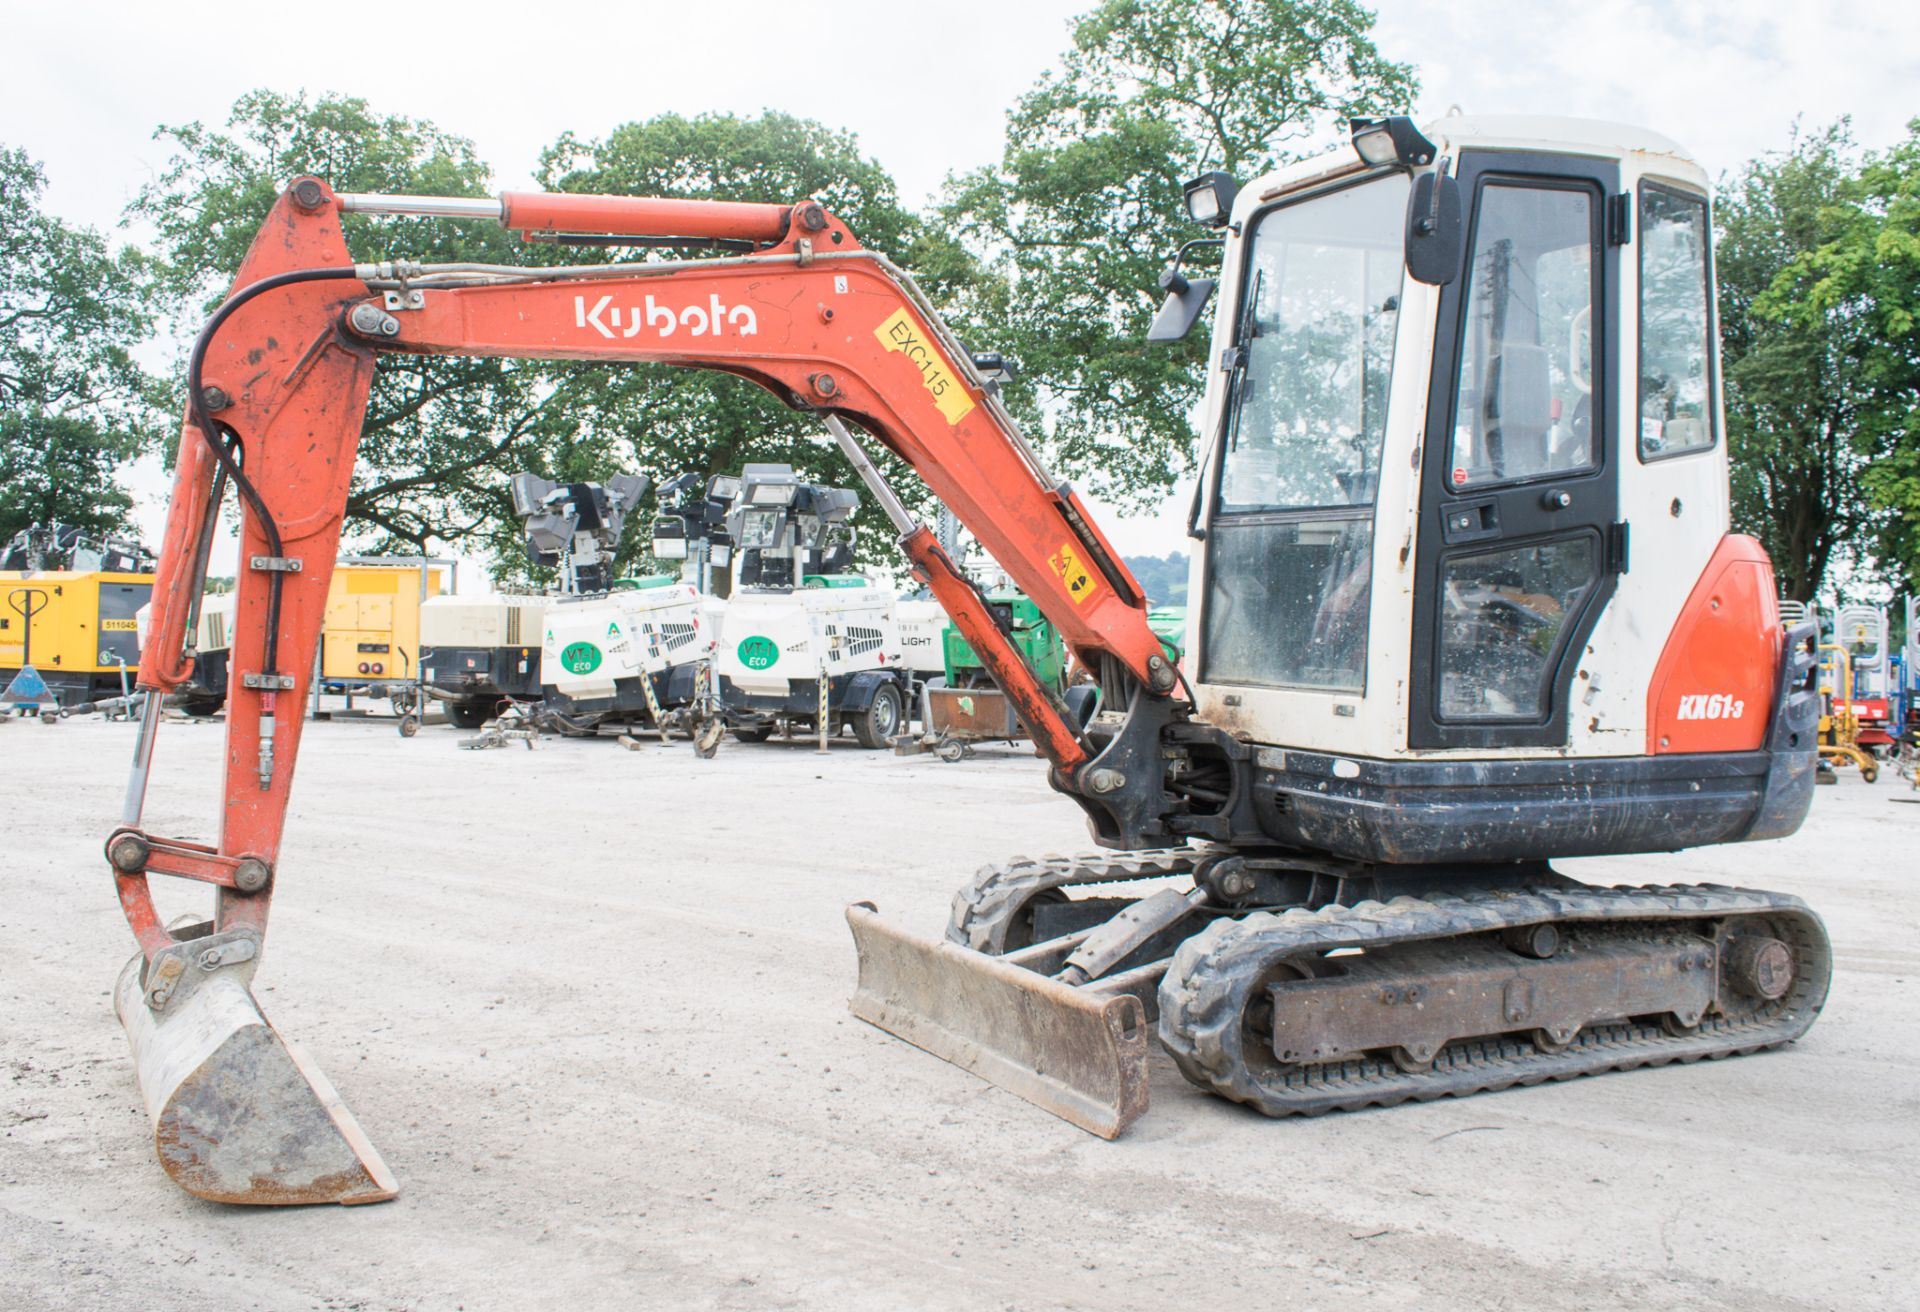 Kubota KX61-3 2.6 tonne rubber tracked mini excavator Year: 2012 S/N: 79234 Recorded Hours: 3457